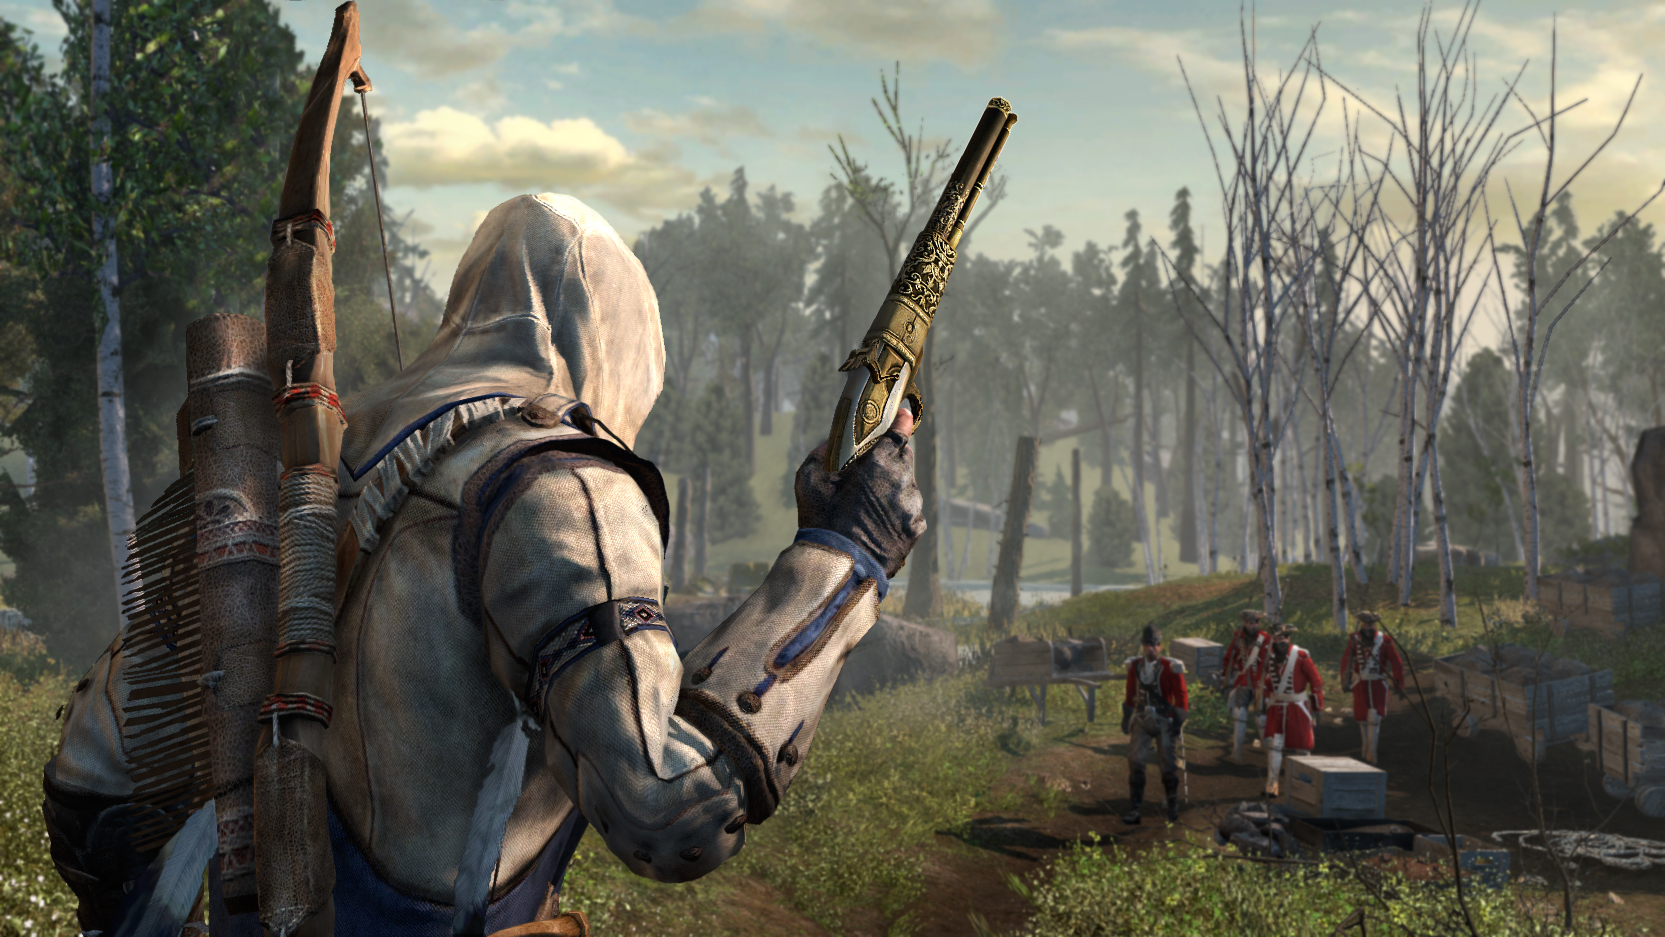 Assassin's Creed III: The Hidden Secrets Pack